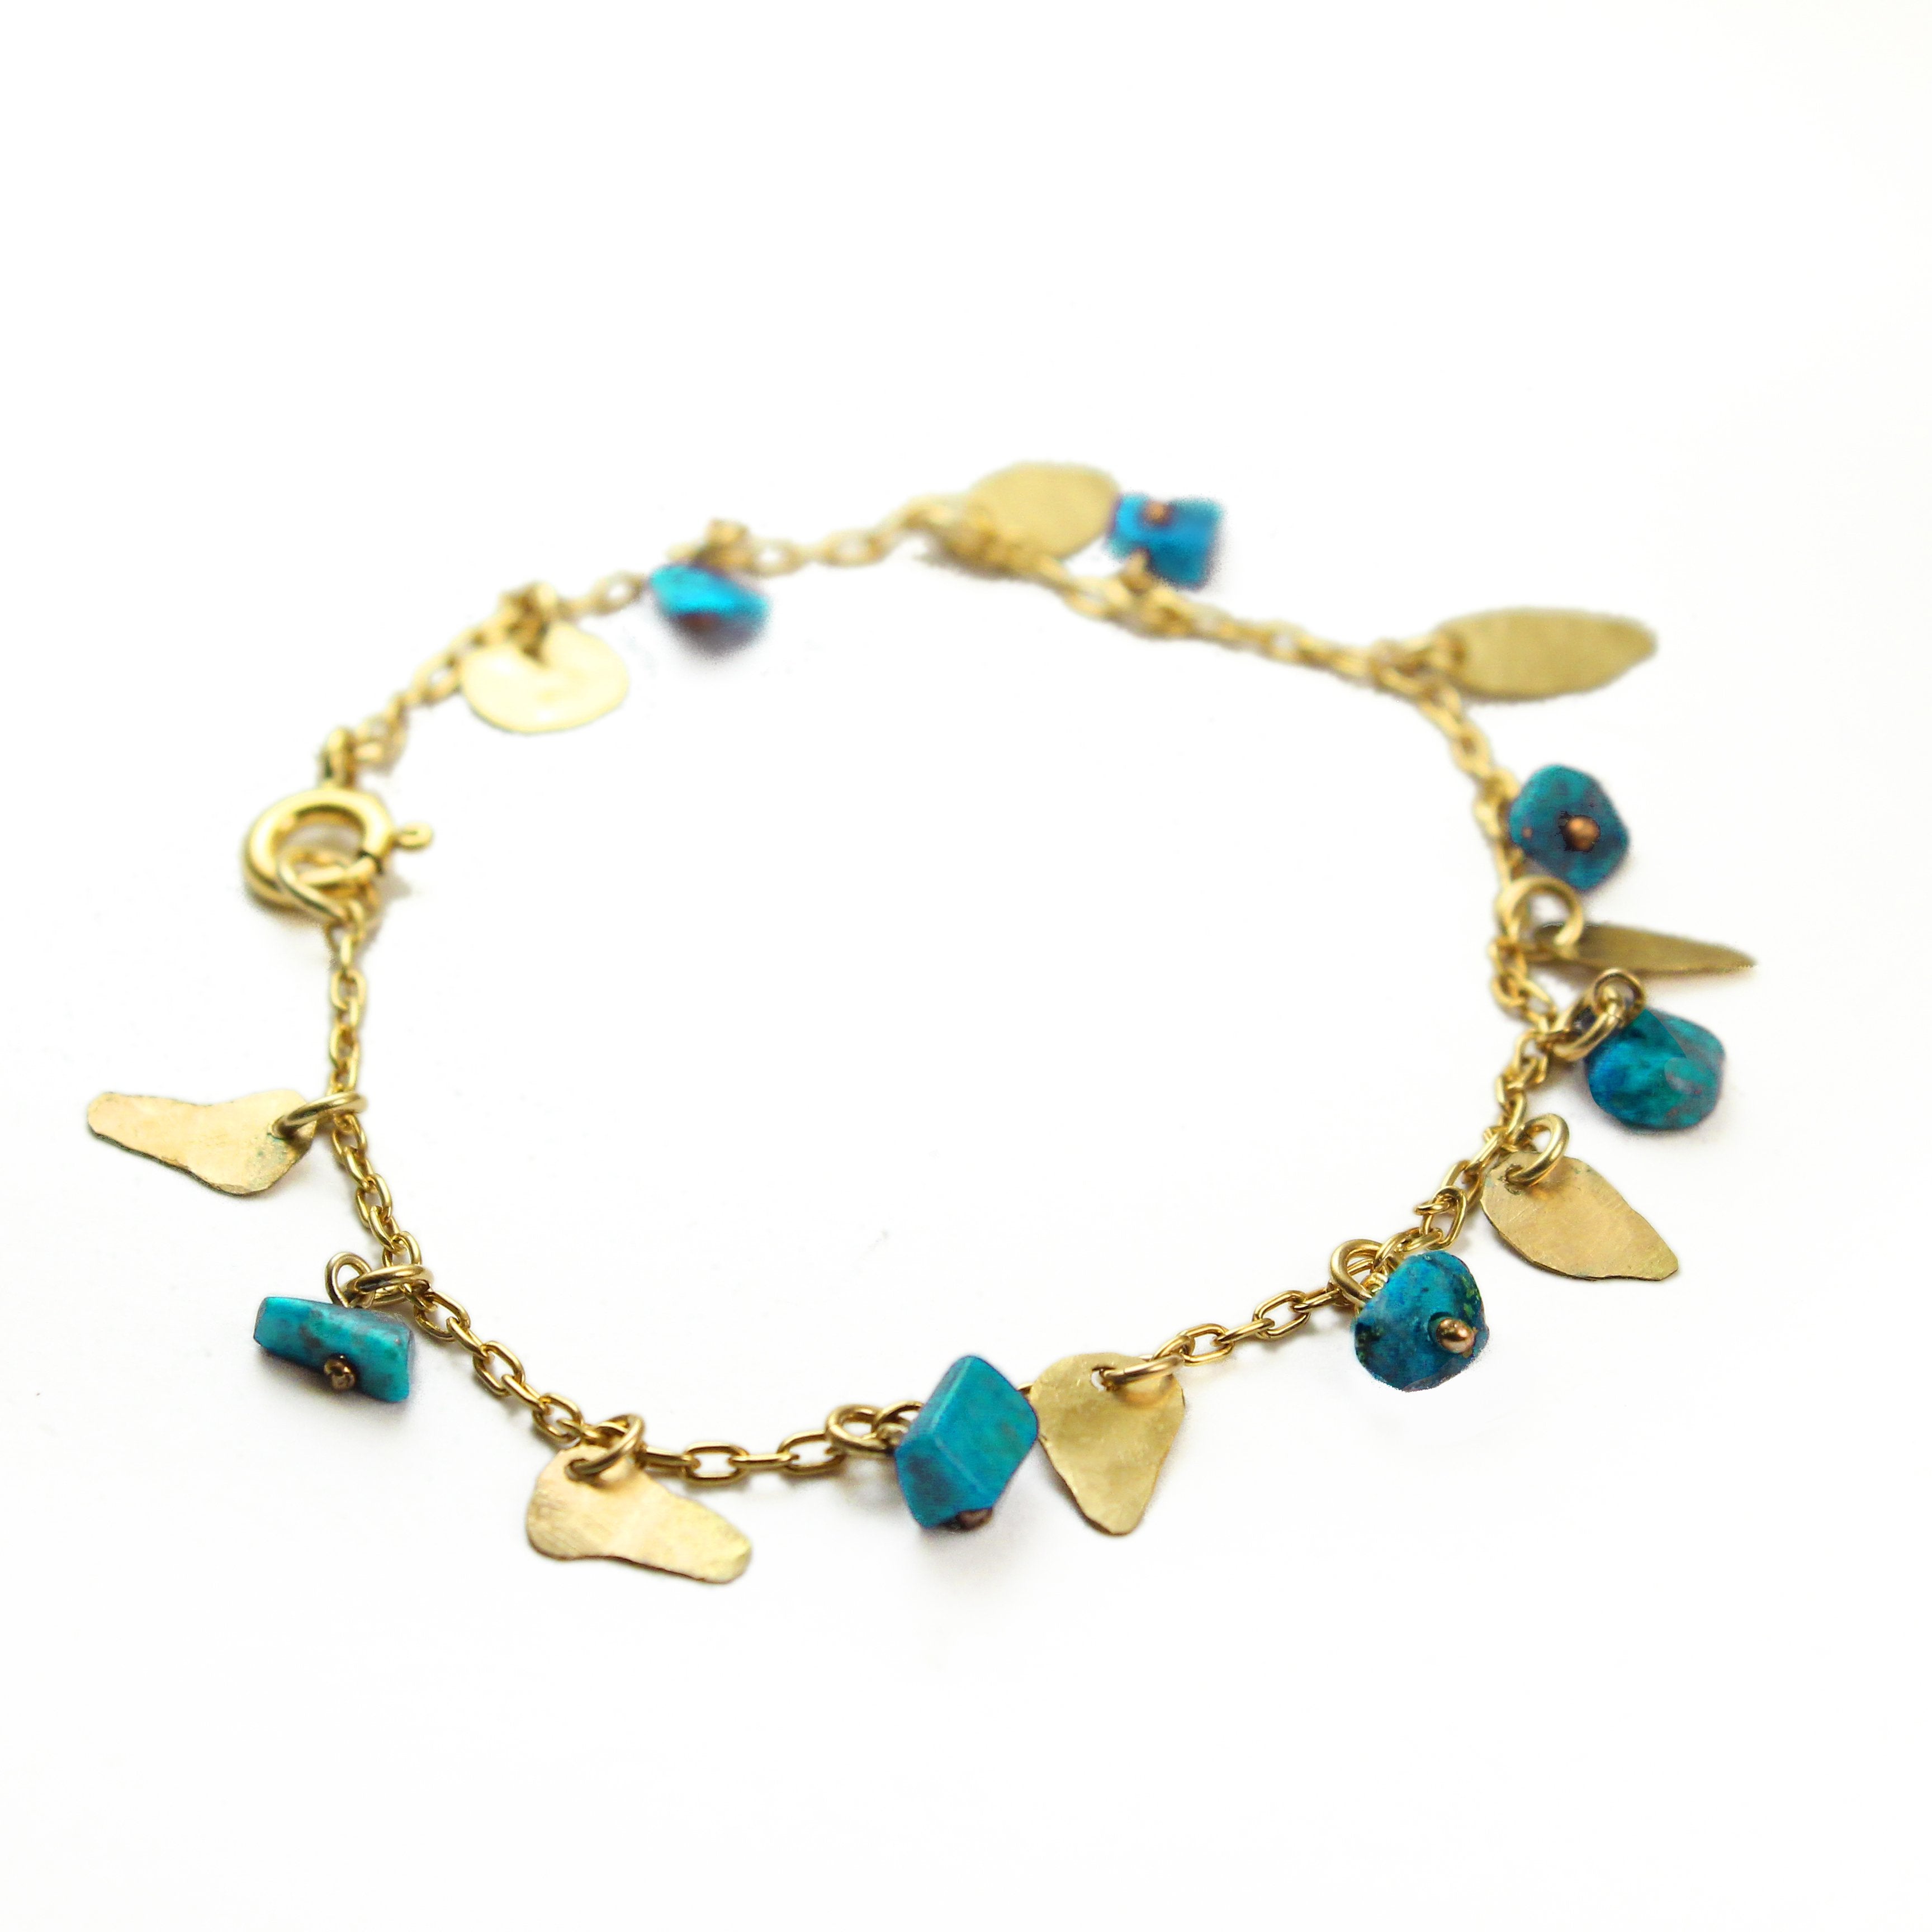 Gold filled Leaves & Turquoise Gemstones Elegant Bracelet - Shulamit Kanter